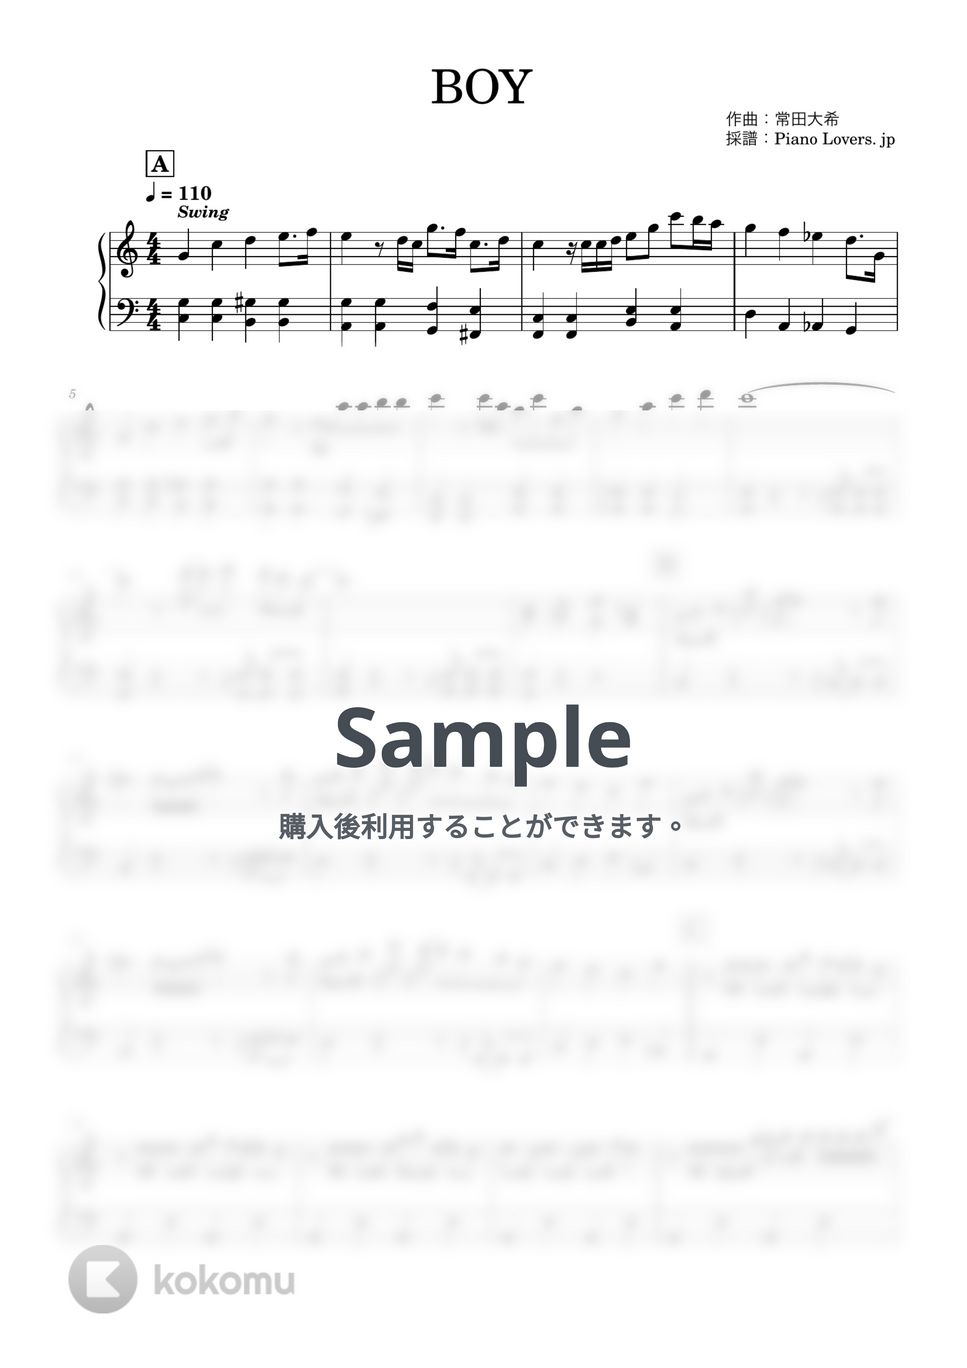 King Gnu - BOY (王様ランキング / ピアノ楽譜 / 初級) by Piano Lovers. jp